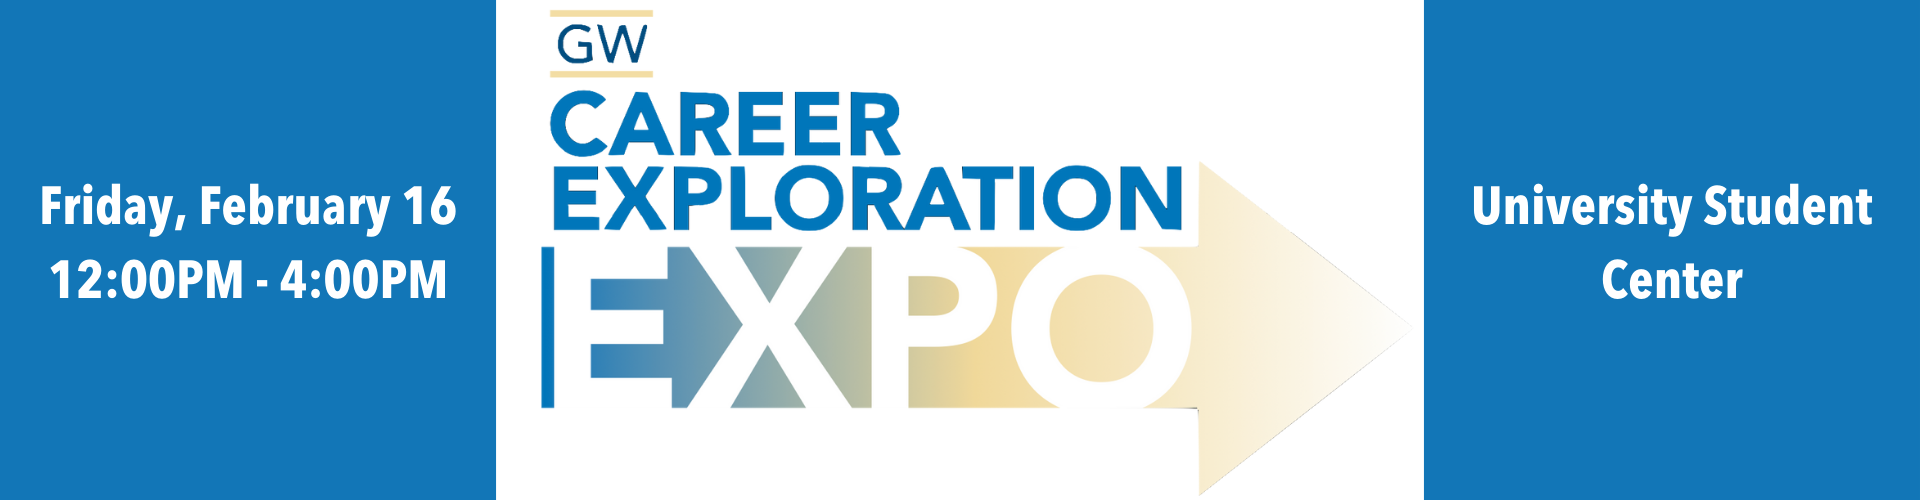 Career Exploration Expo Event Info